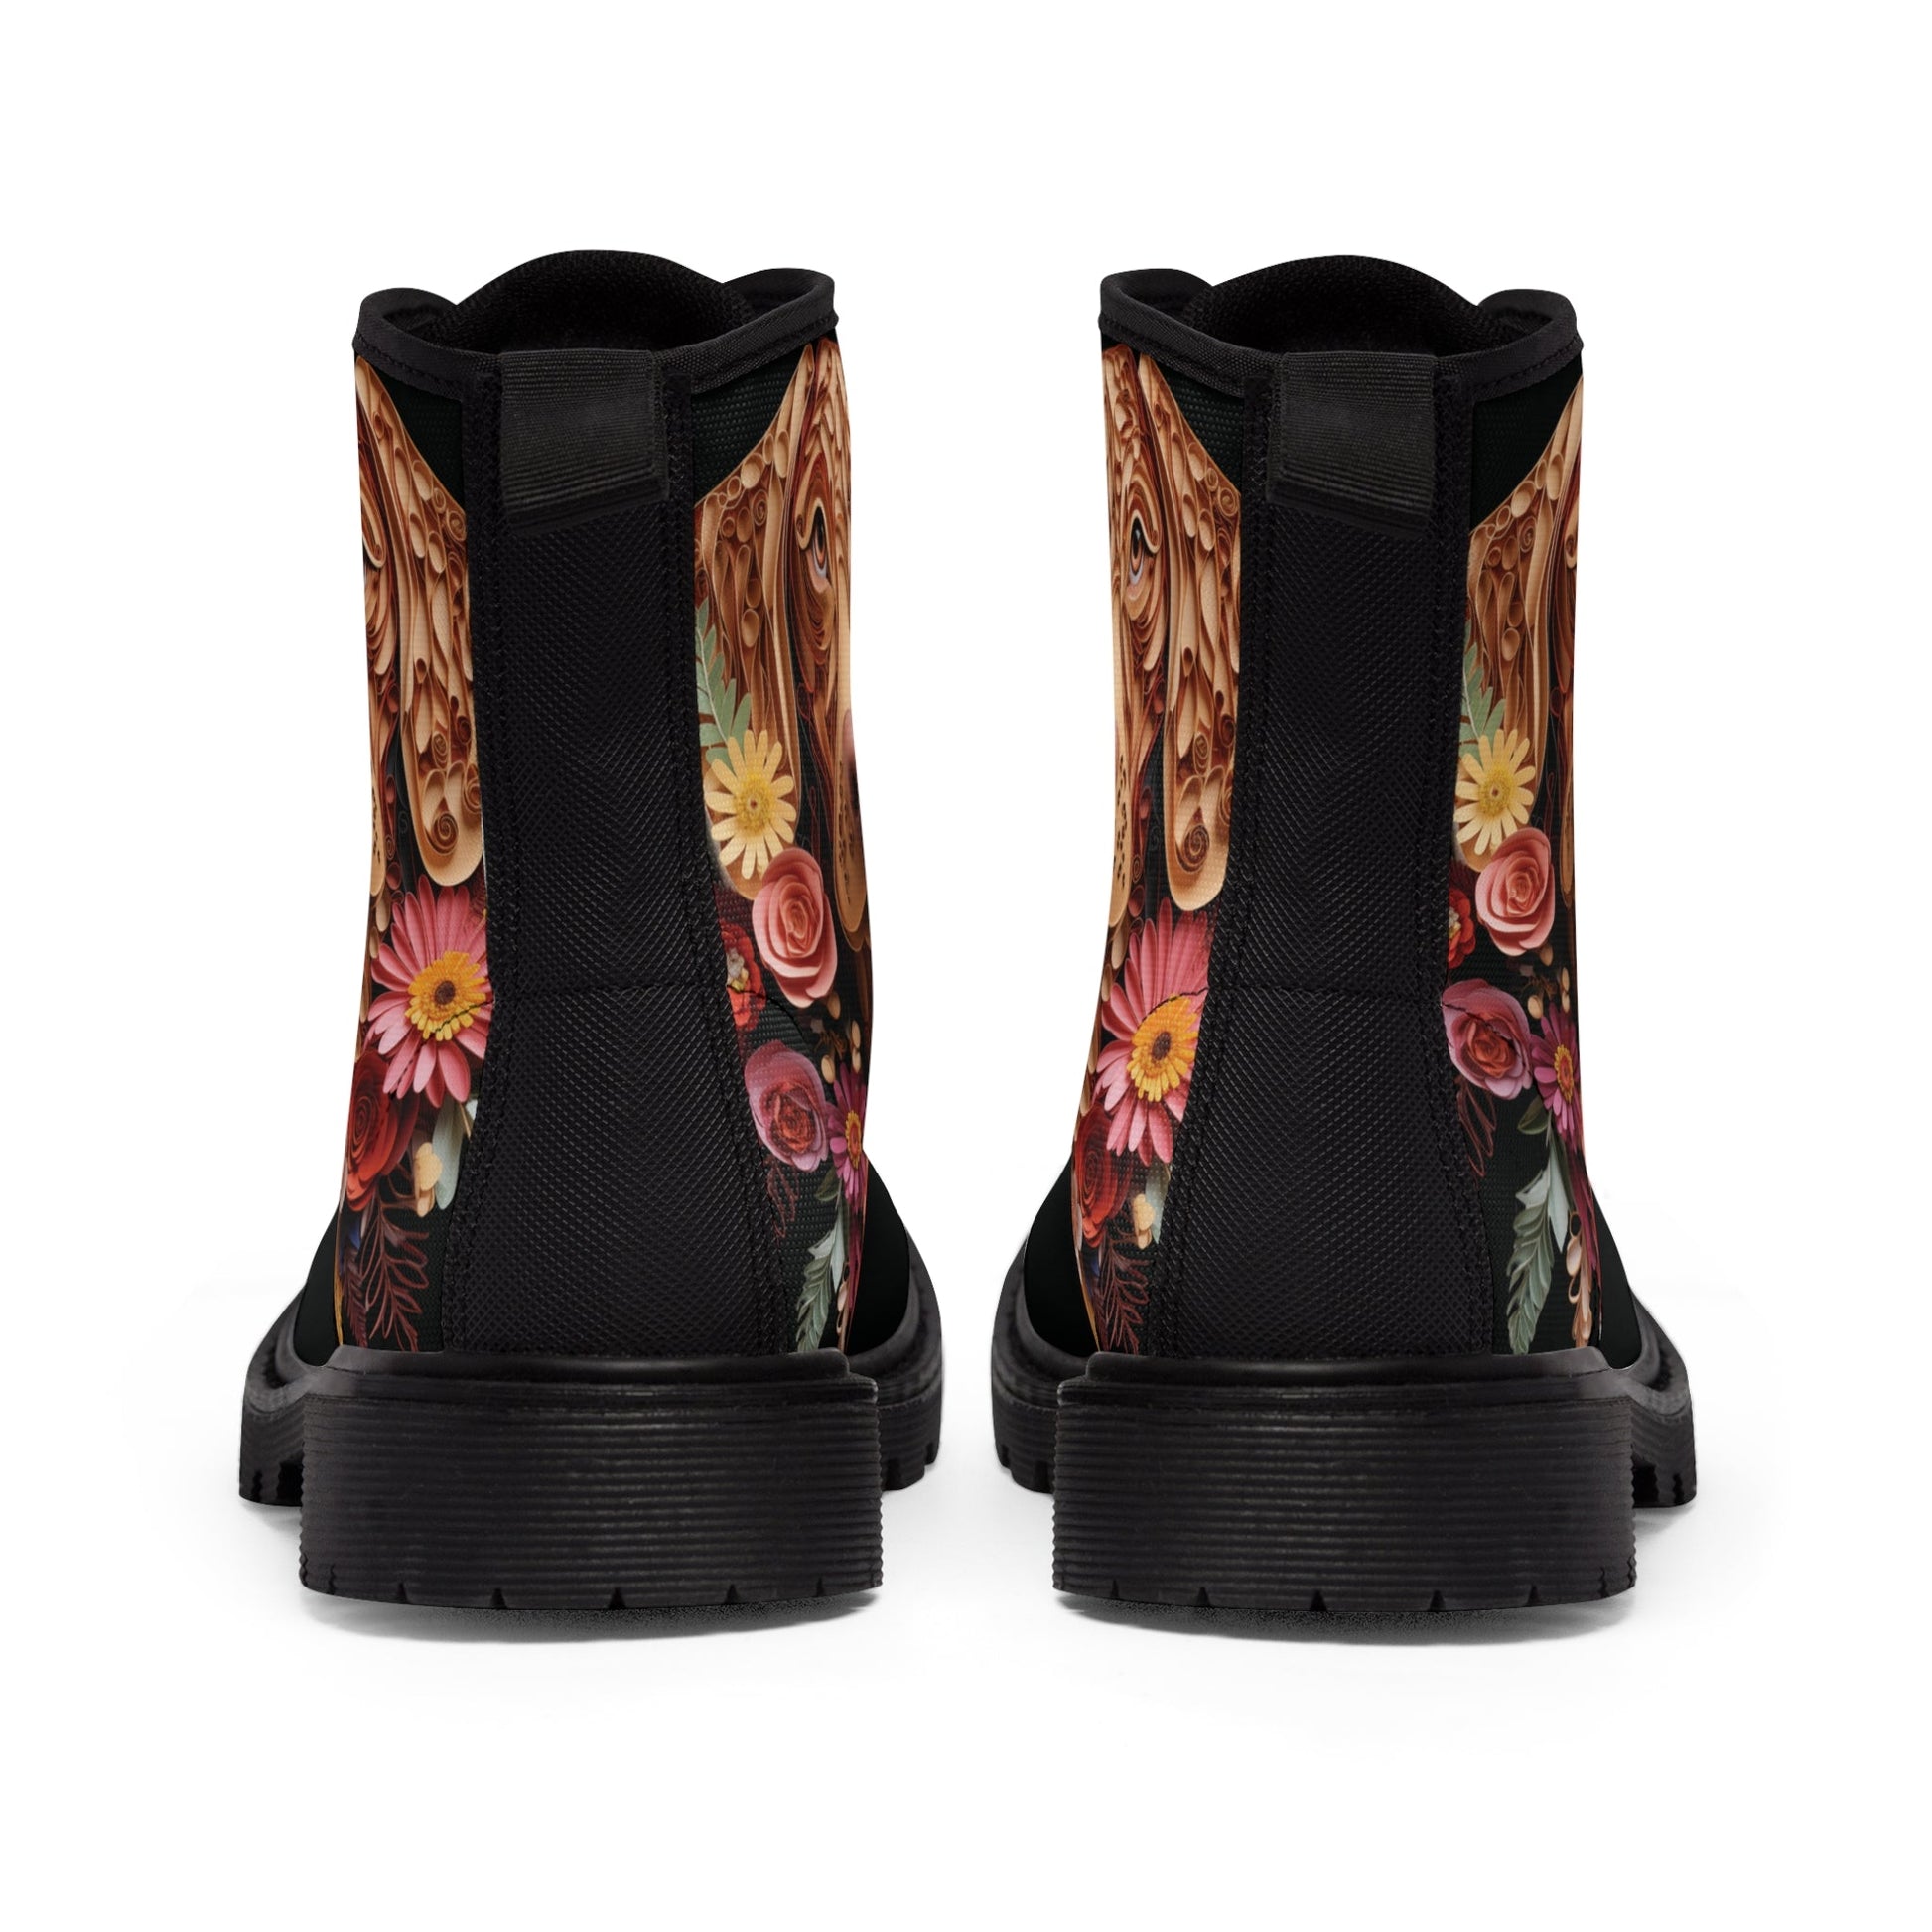 Women's Canvas Boots featuring a Vizsla Paper Quilled Effect Design - Hobbster